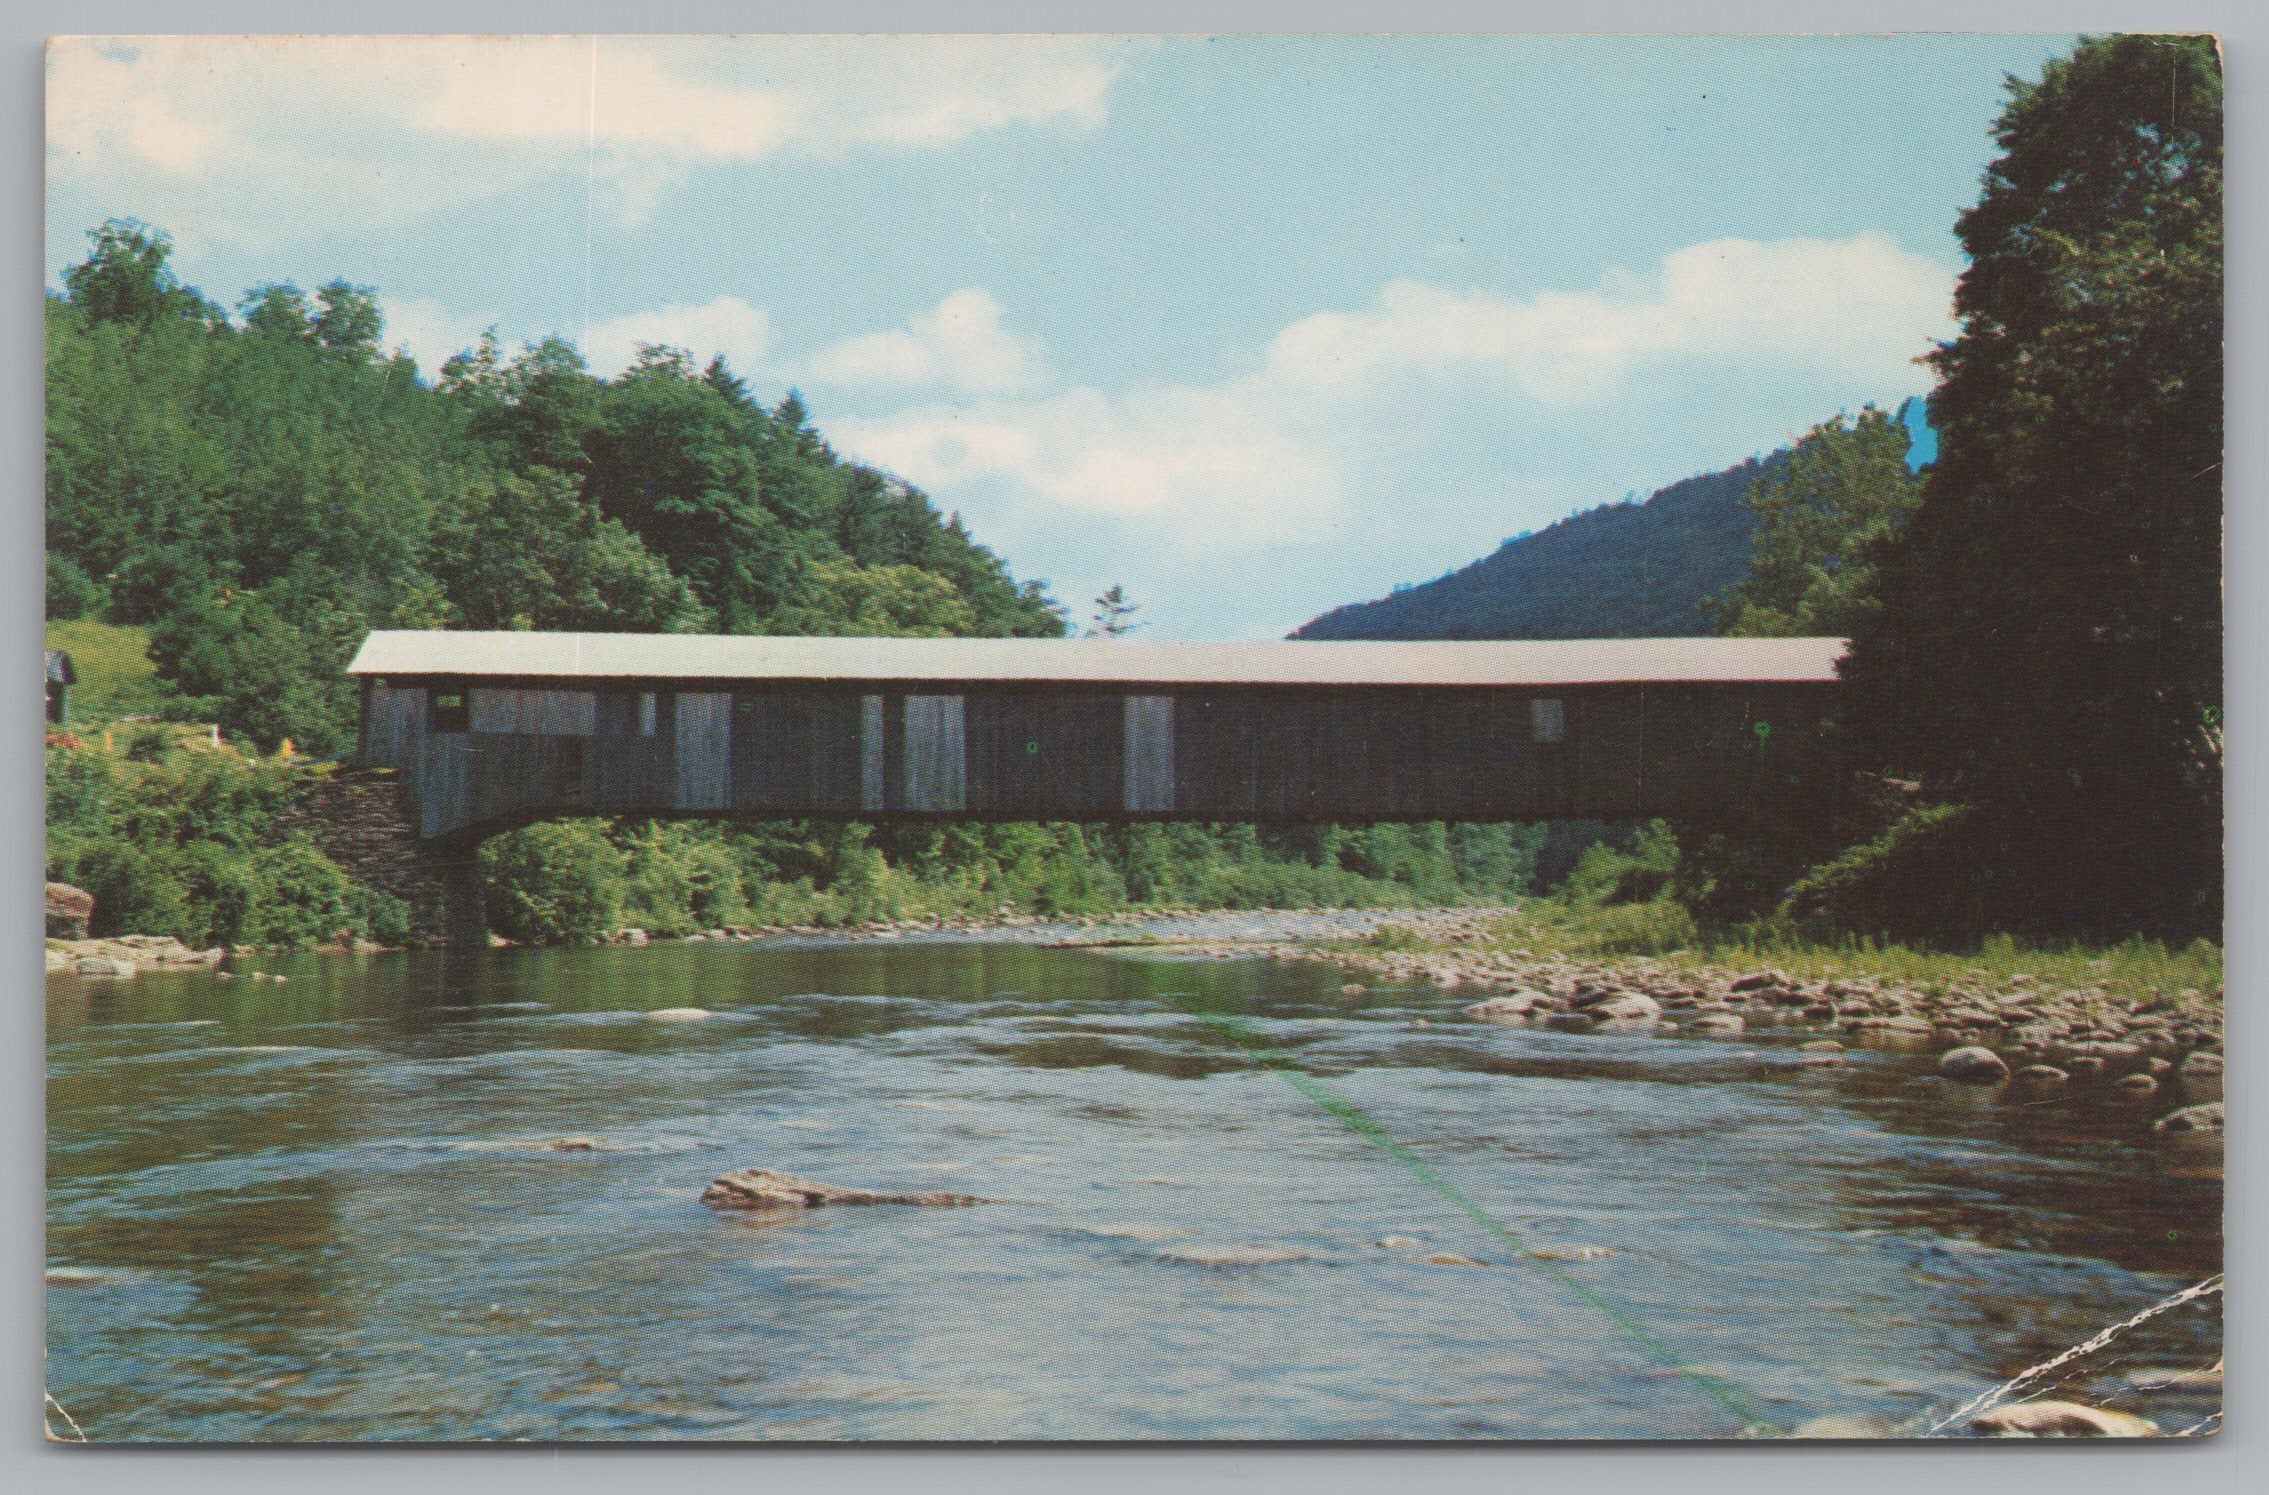 The Old Covered Bridge, Loyalsock Creek, Forksville, Pennsylvania, Vintage Post Card.